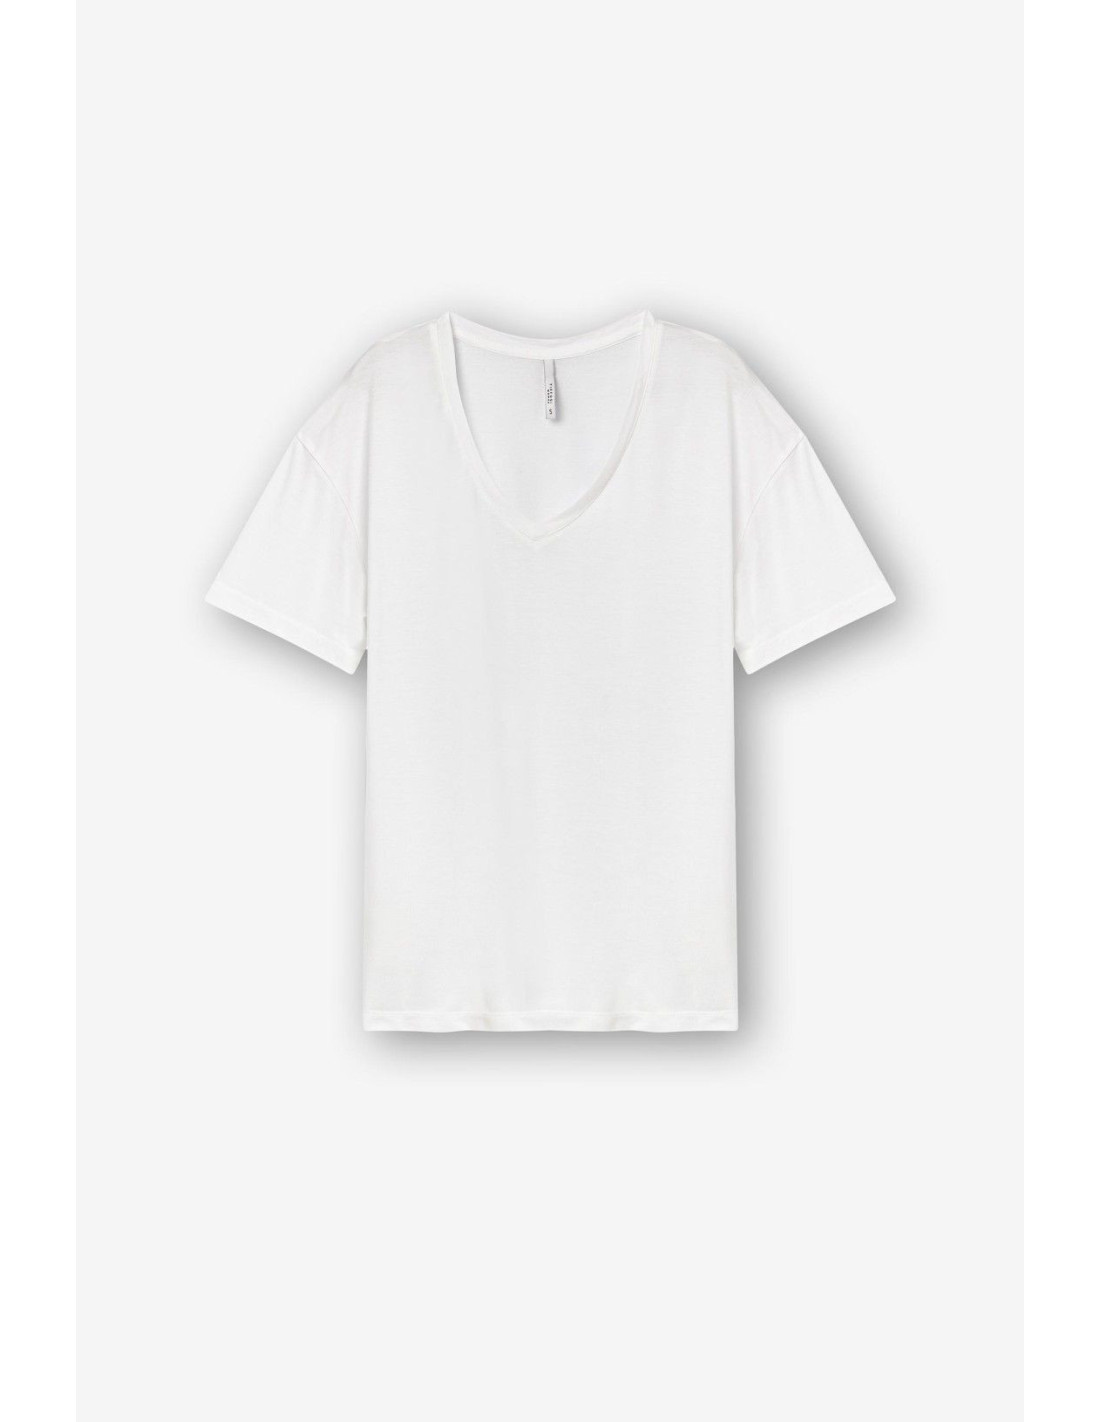 Camiseta Tiffosi básica pico Blanco